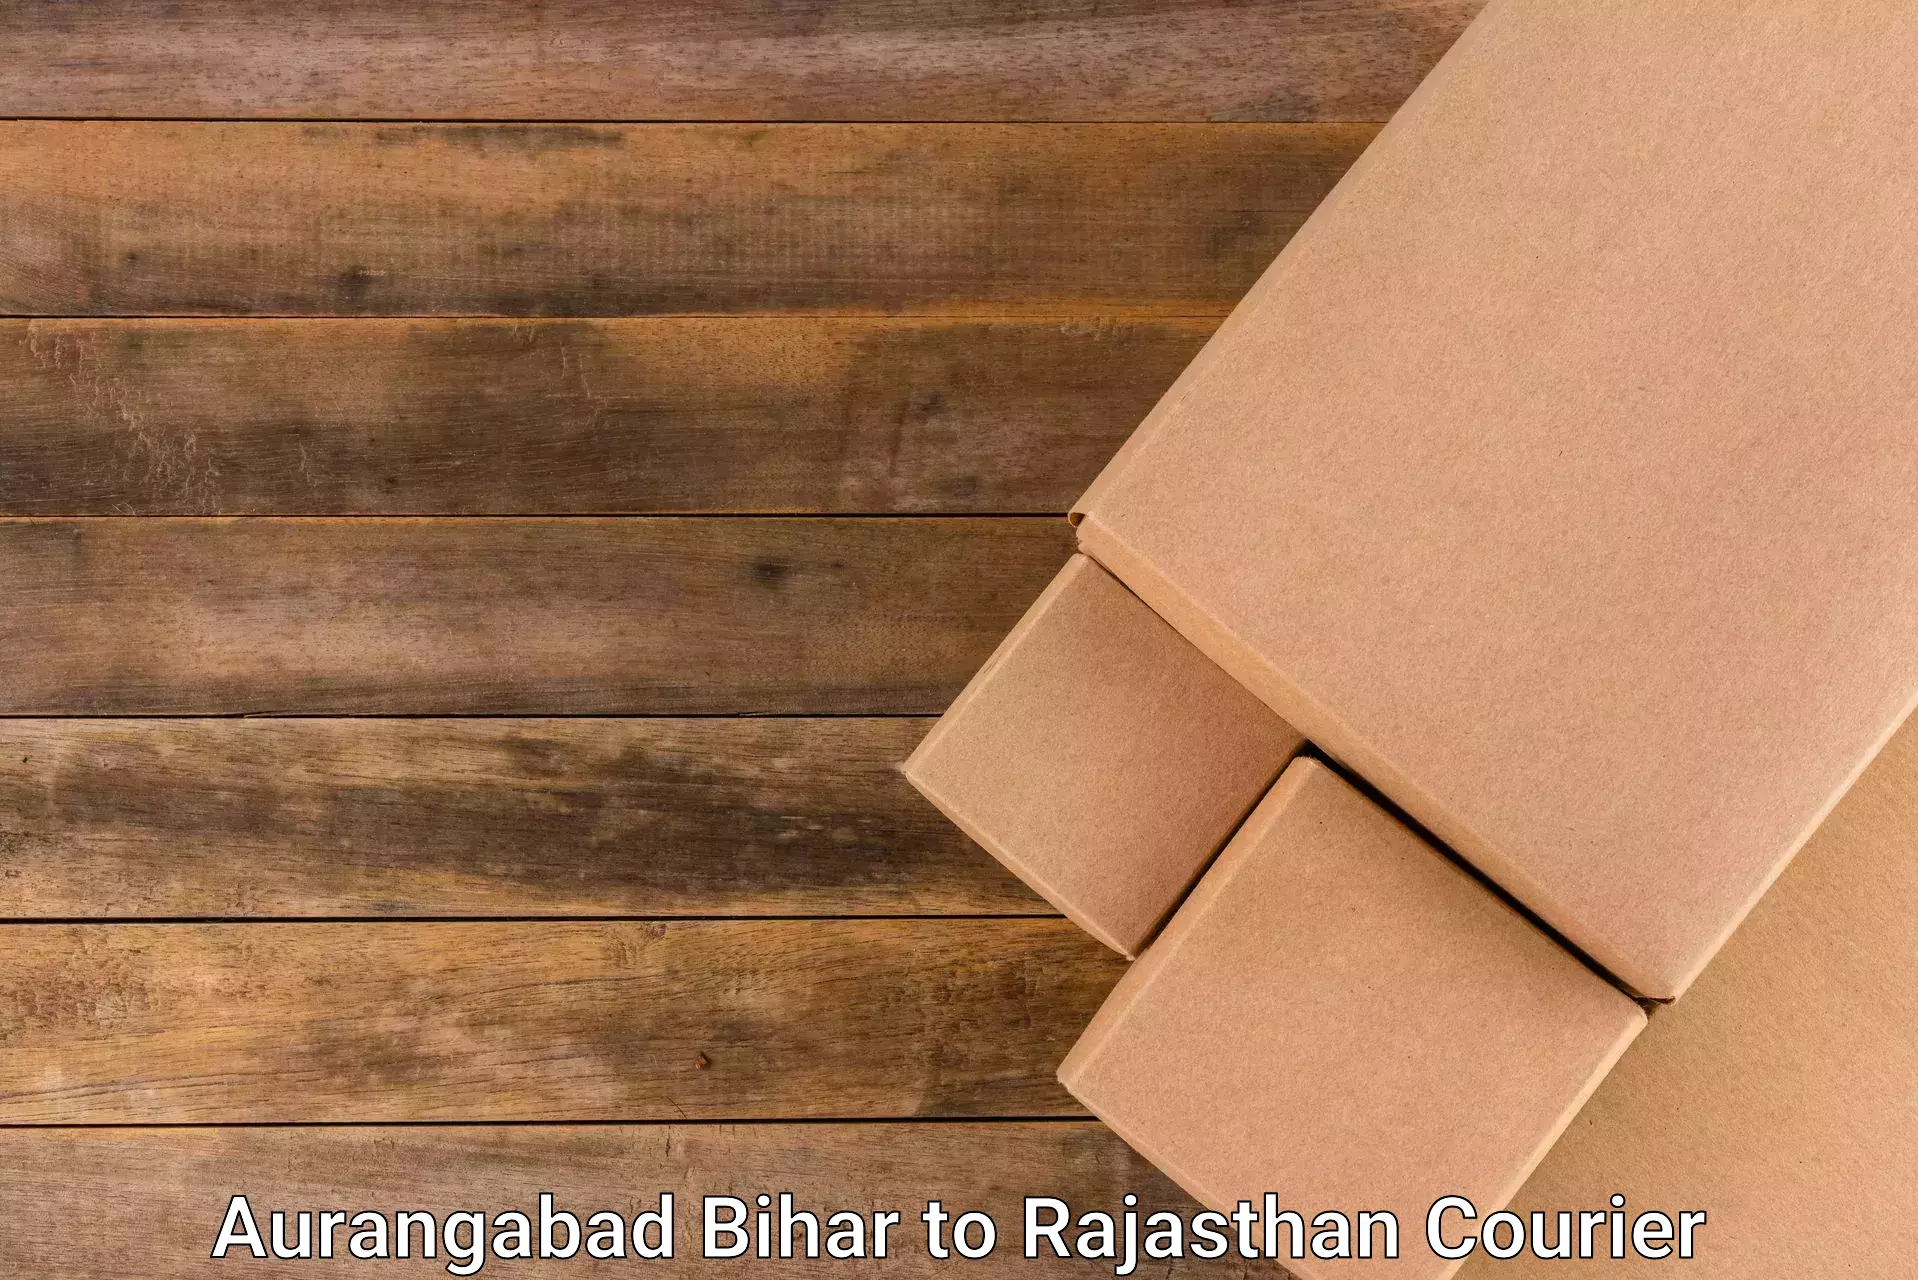 Courier service booking Aurangabad Bihar to Reengus